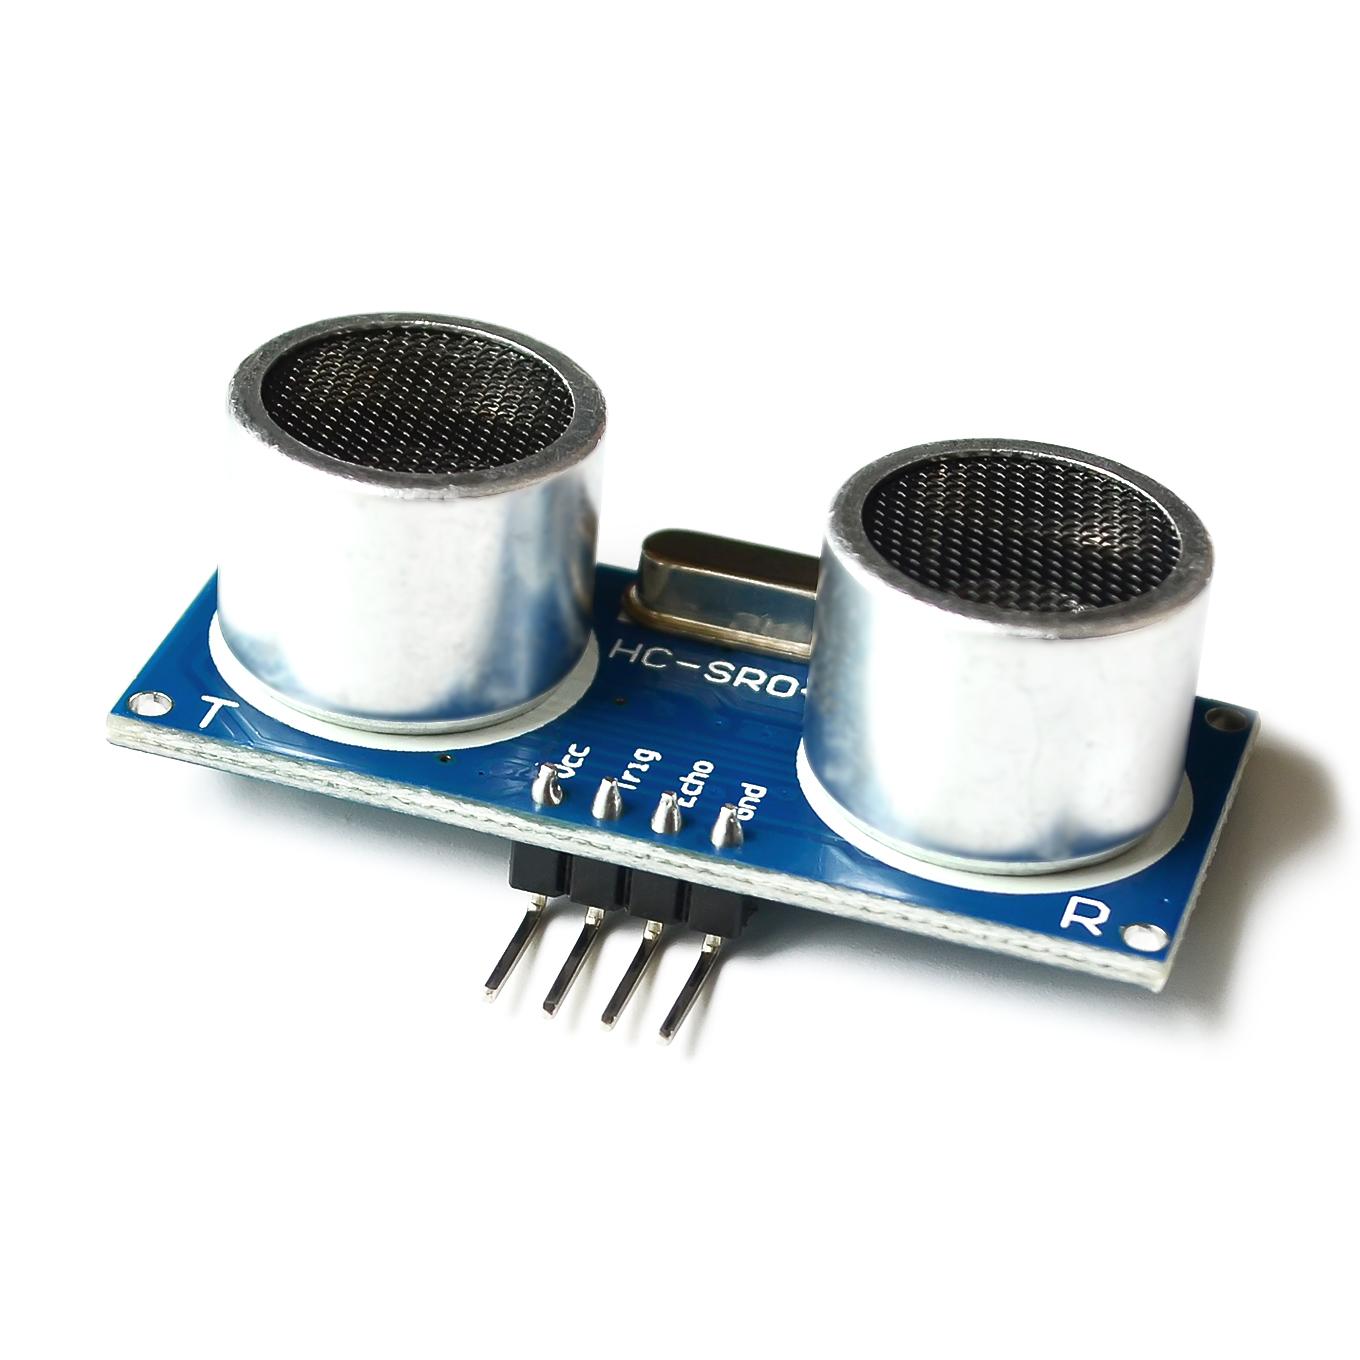 10pcs Best price HC-SR04 ultrasonic sensor distance measuring module HCSR04